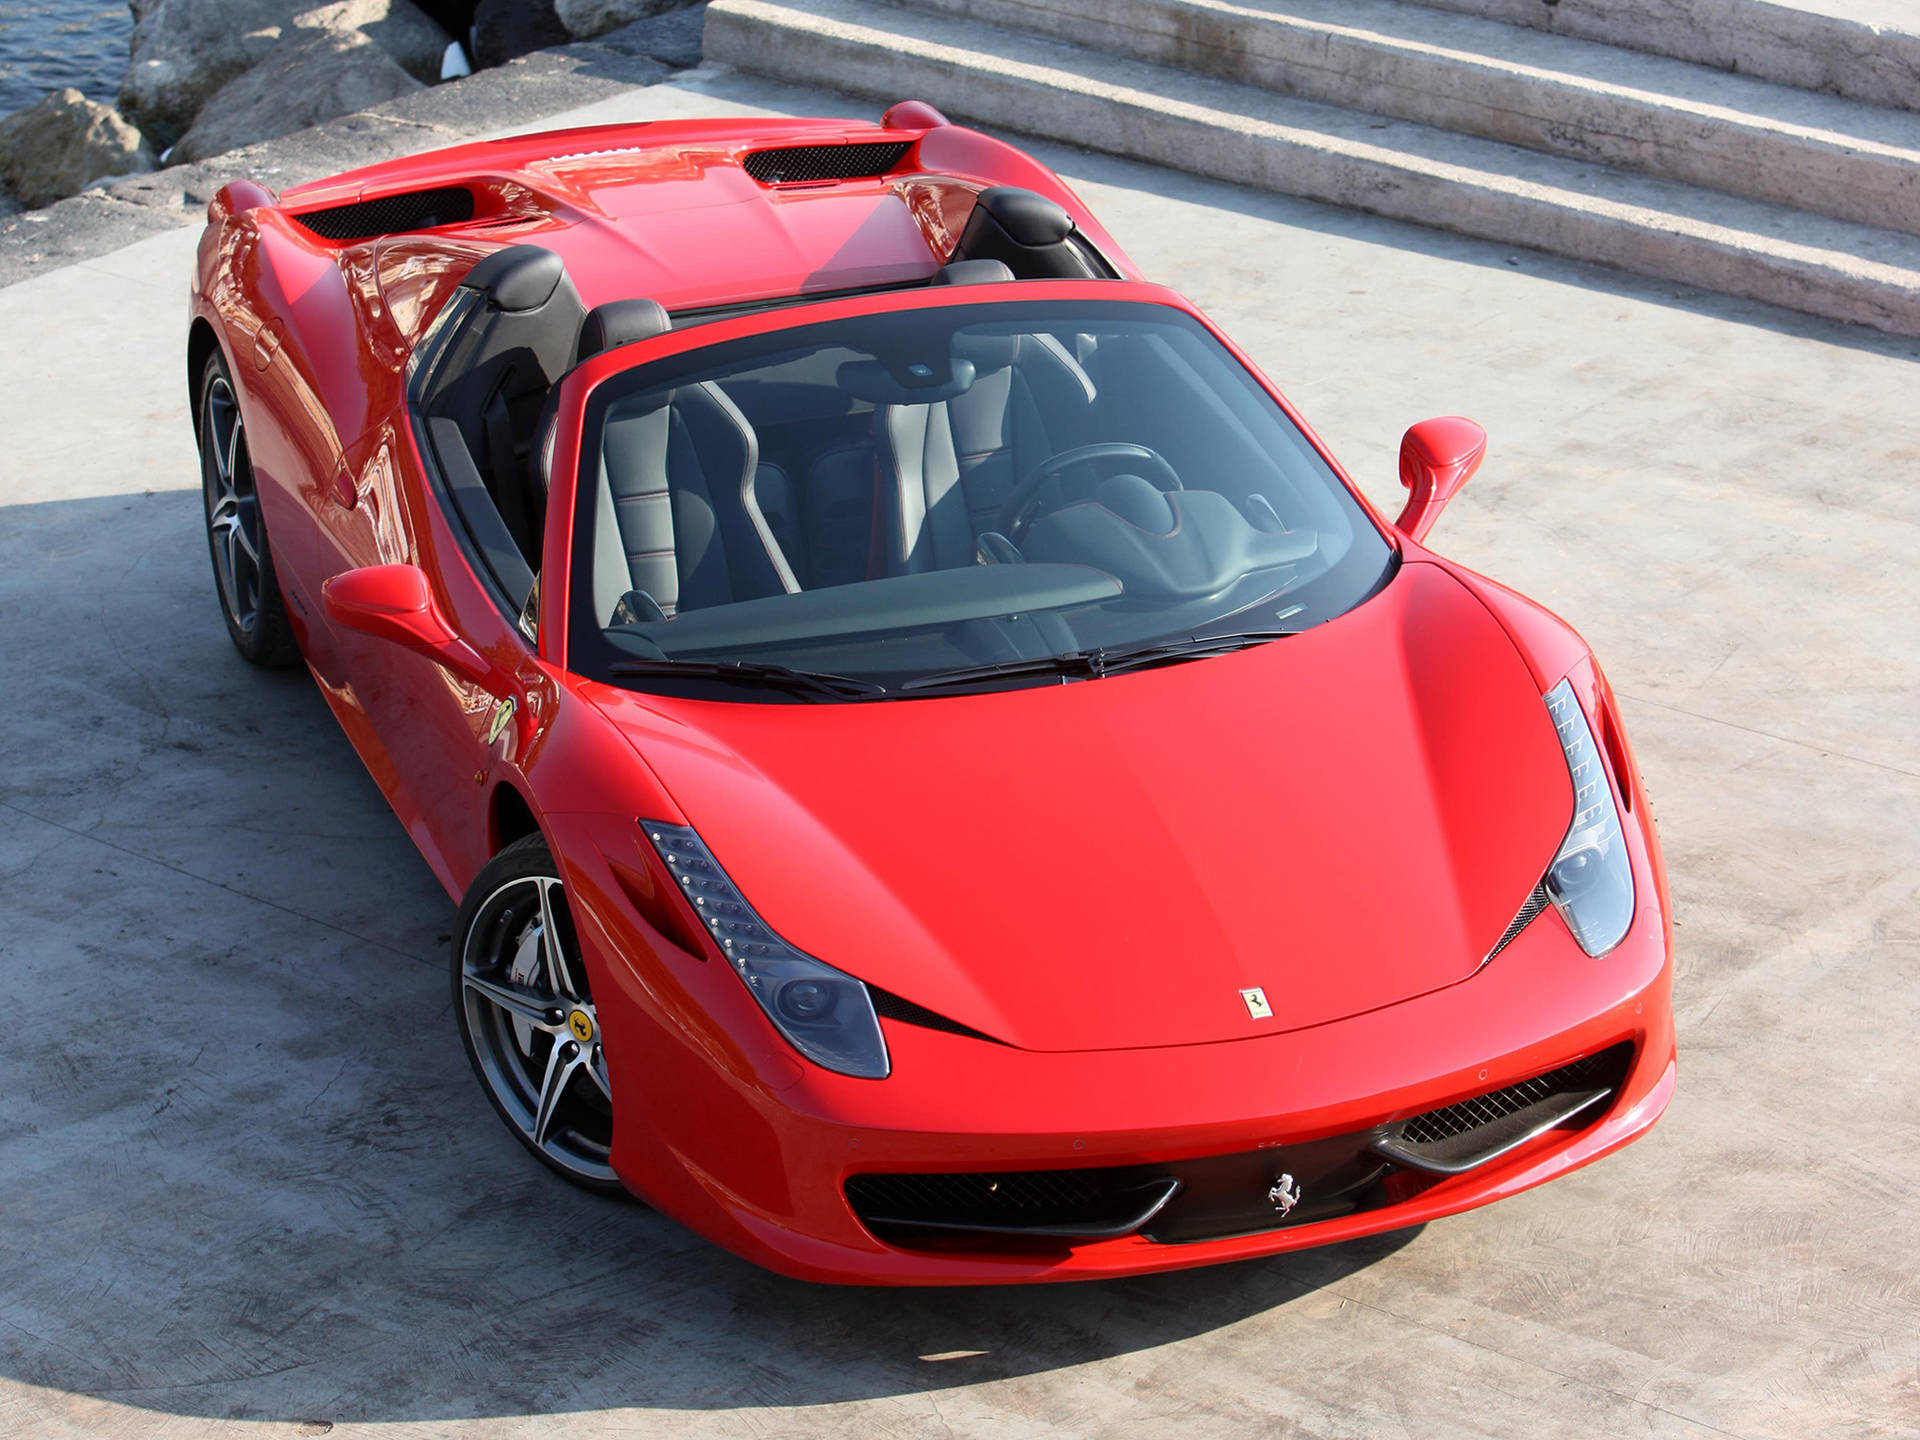 4k Ferrari Red Luxury Car